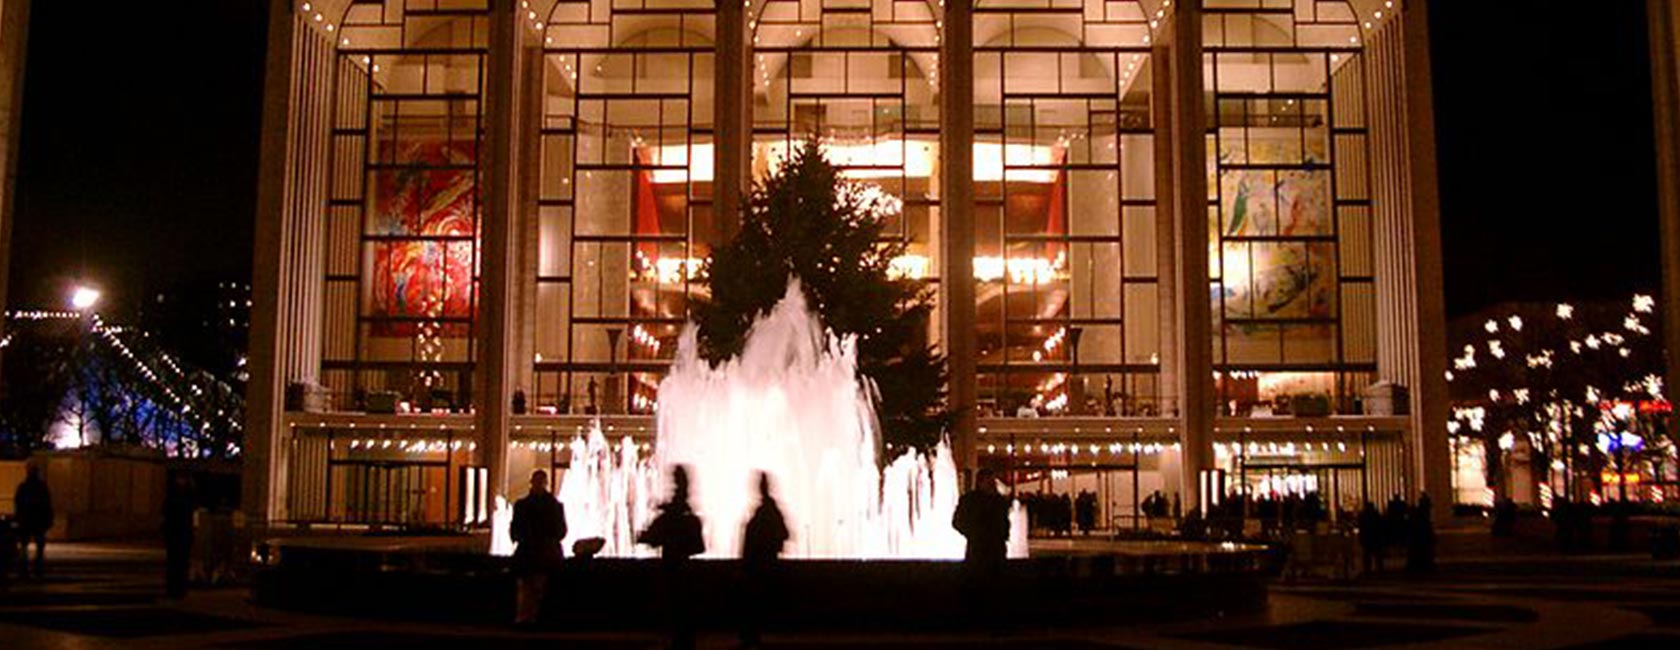 Metropolitan Opera in New York City